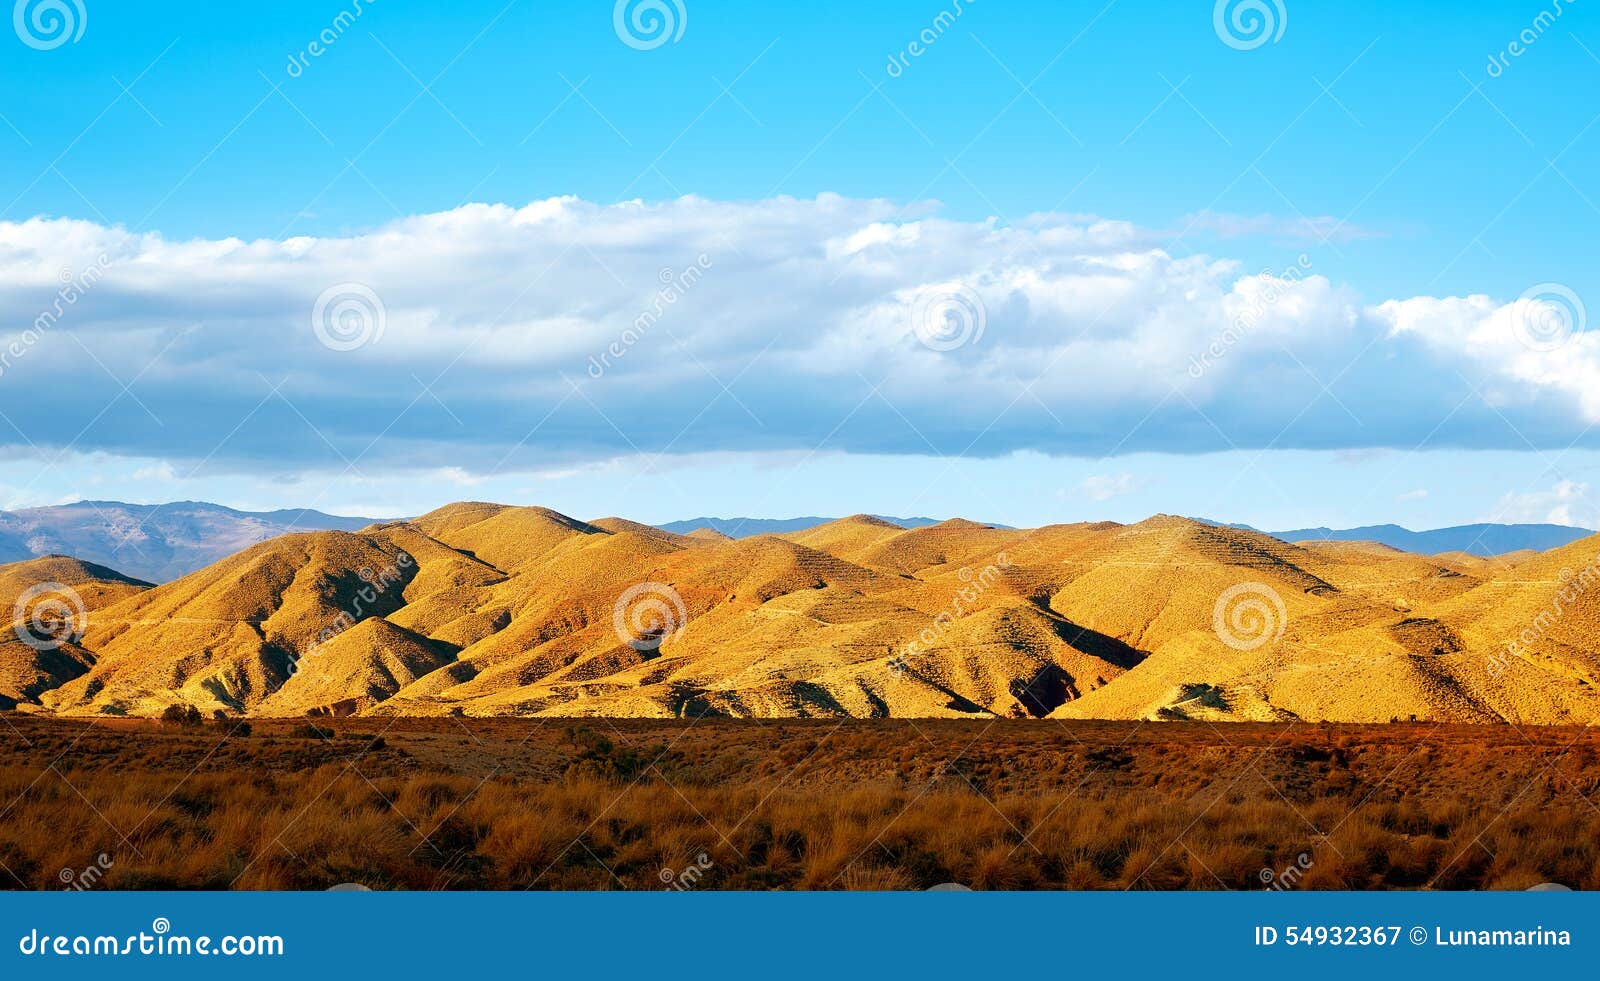 almeria tabernas desert mountains in spain